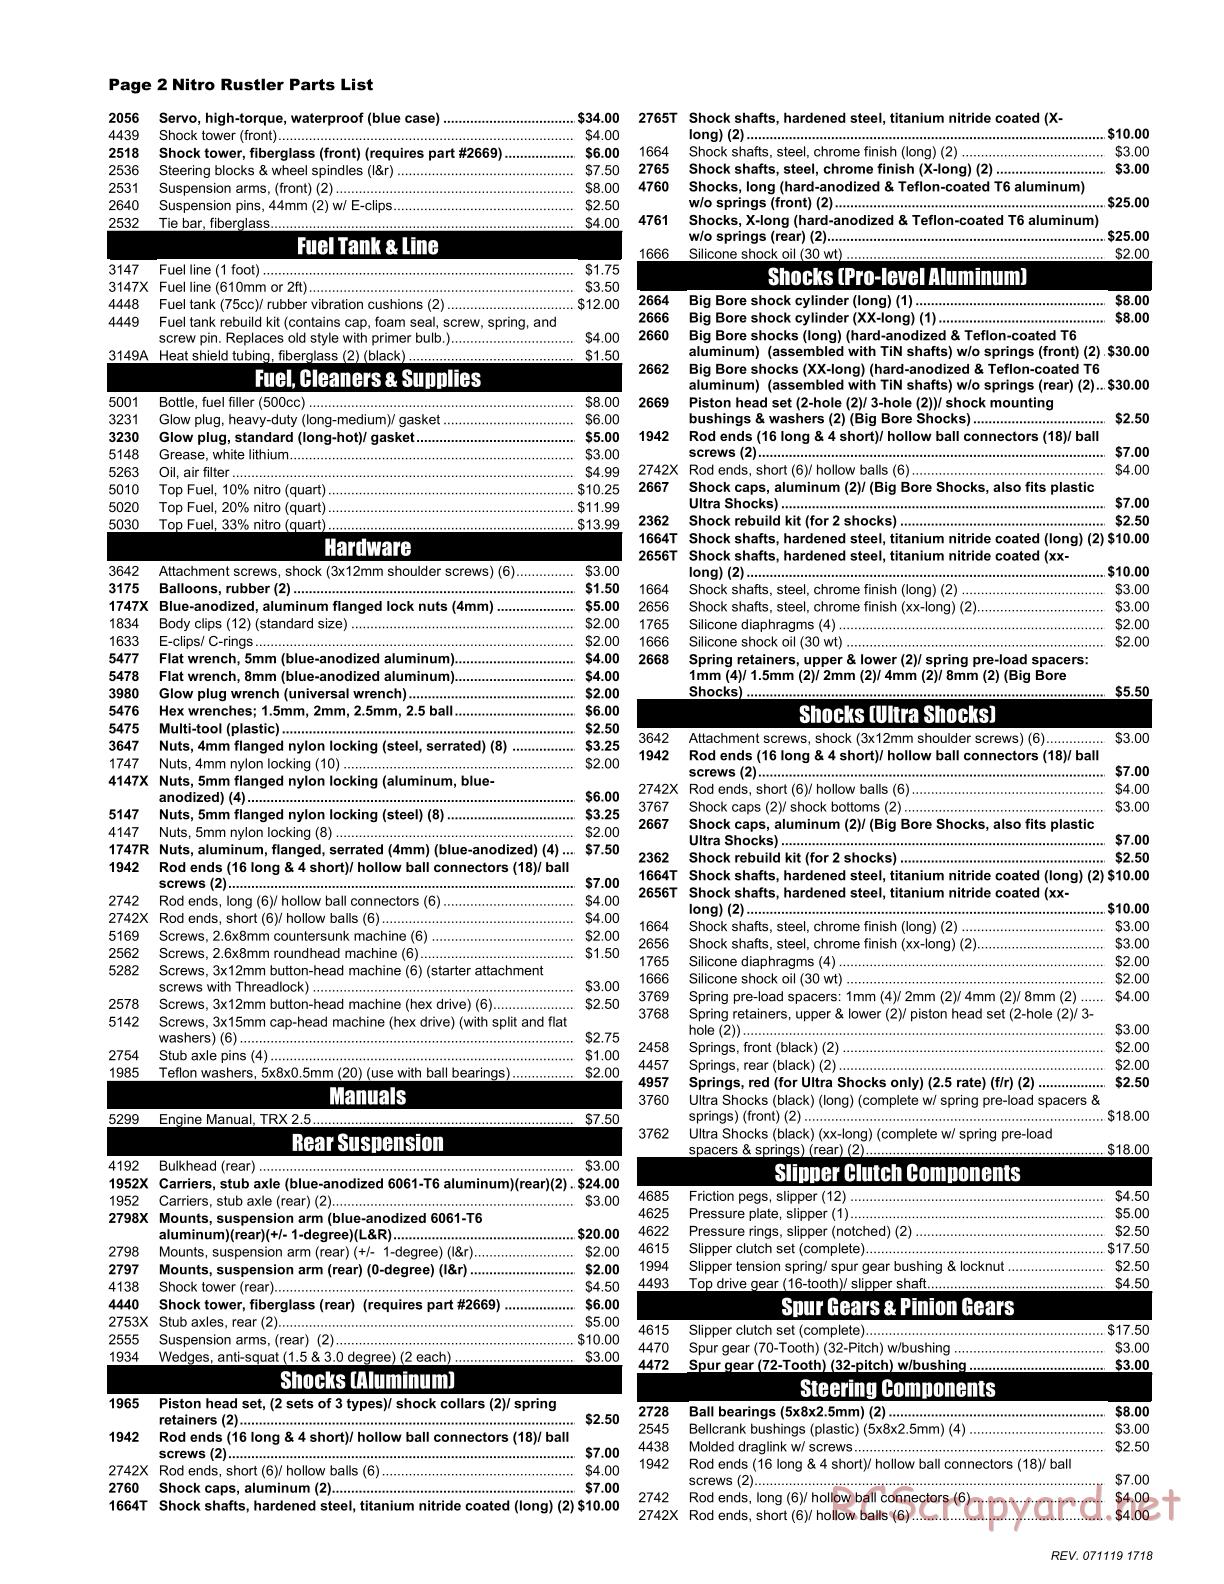 Traxxas - Nitro Rustler 2.5 (2003) - Parts List - Page 2